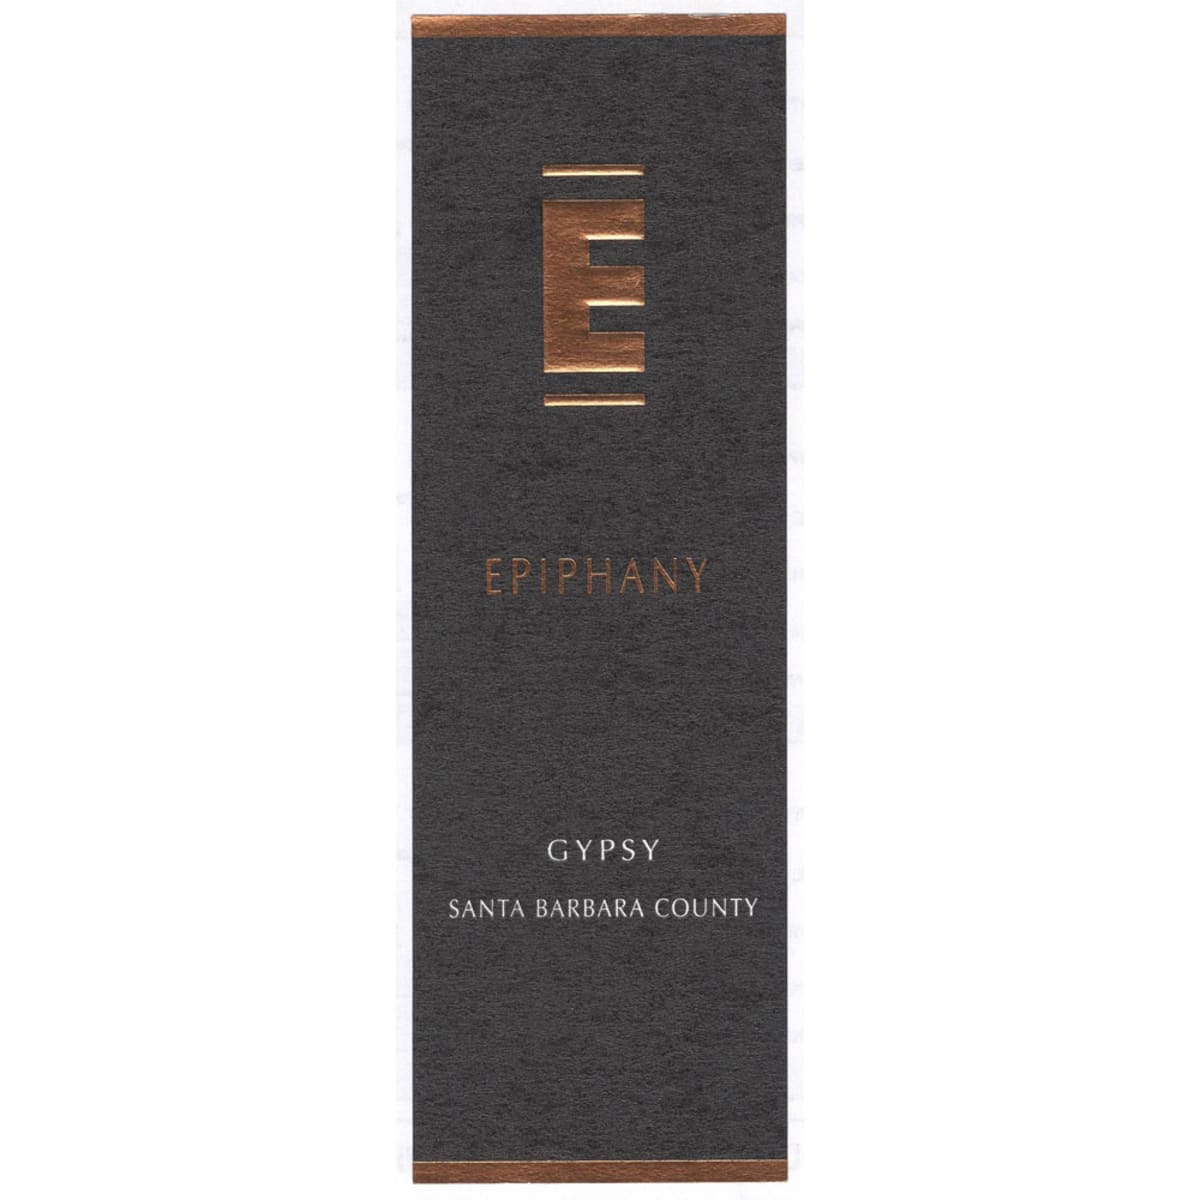 Epiphany Gypsy 2011 Front Label